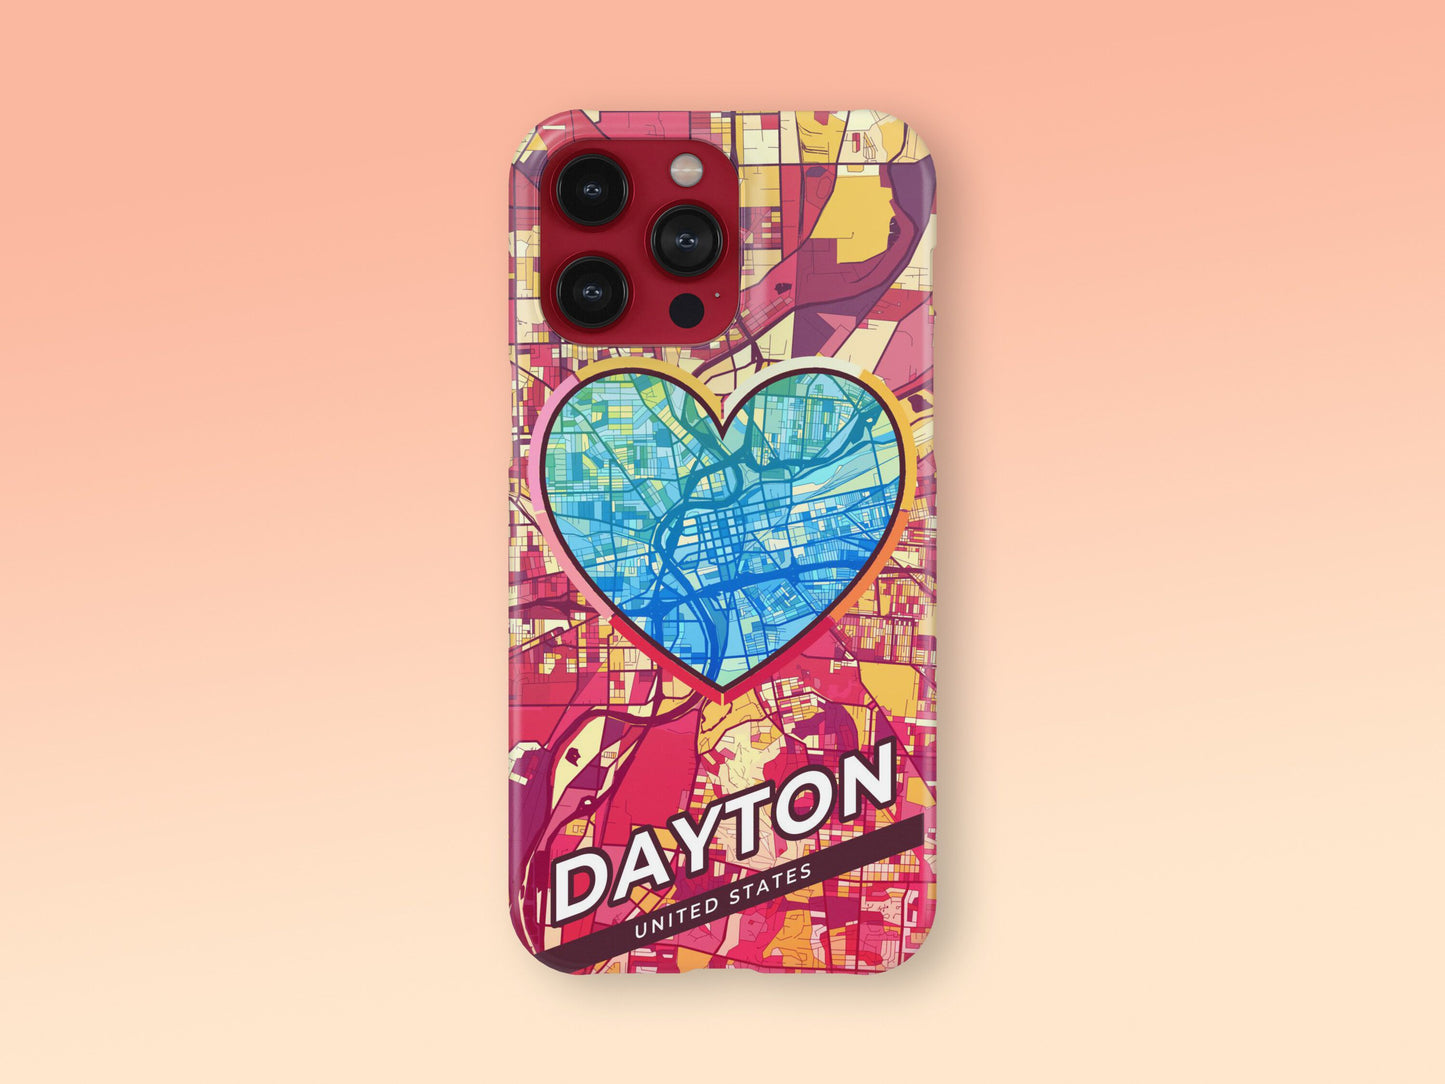 Dayton Ohio slim phone case with colorful icon. Birthday, wedding or housewarming gift. Couple match cases. 2